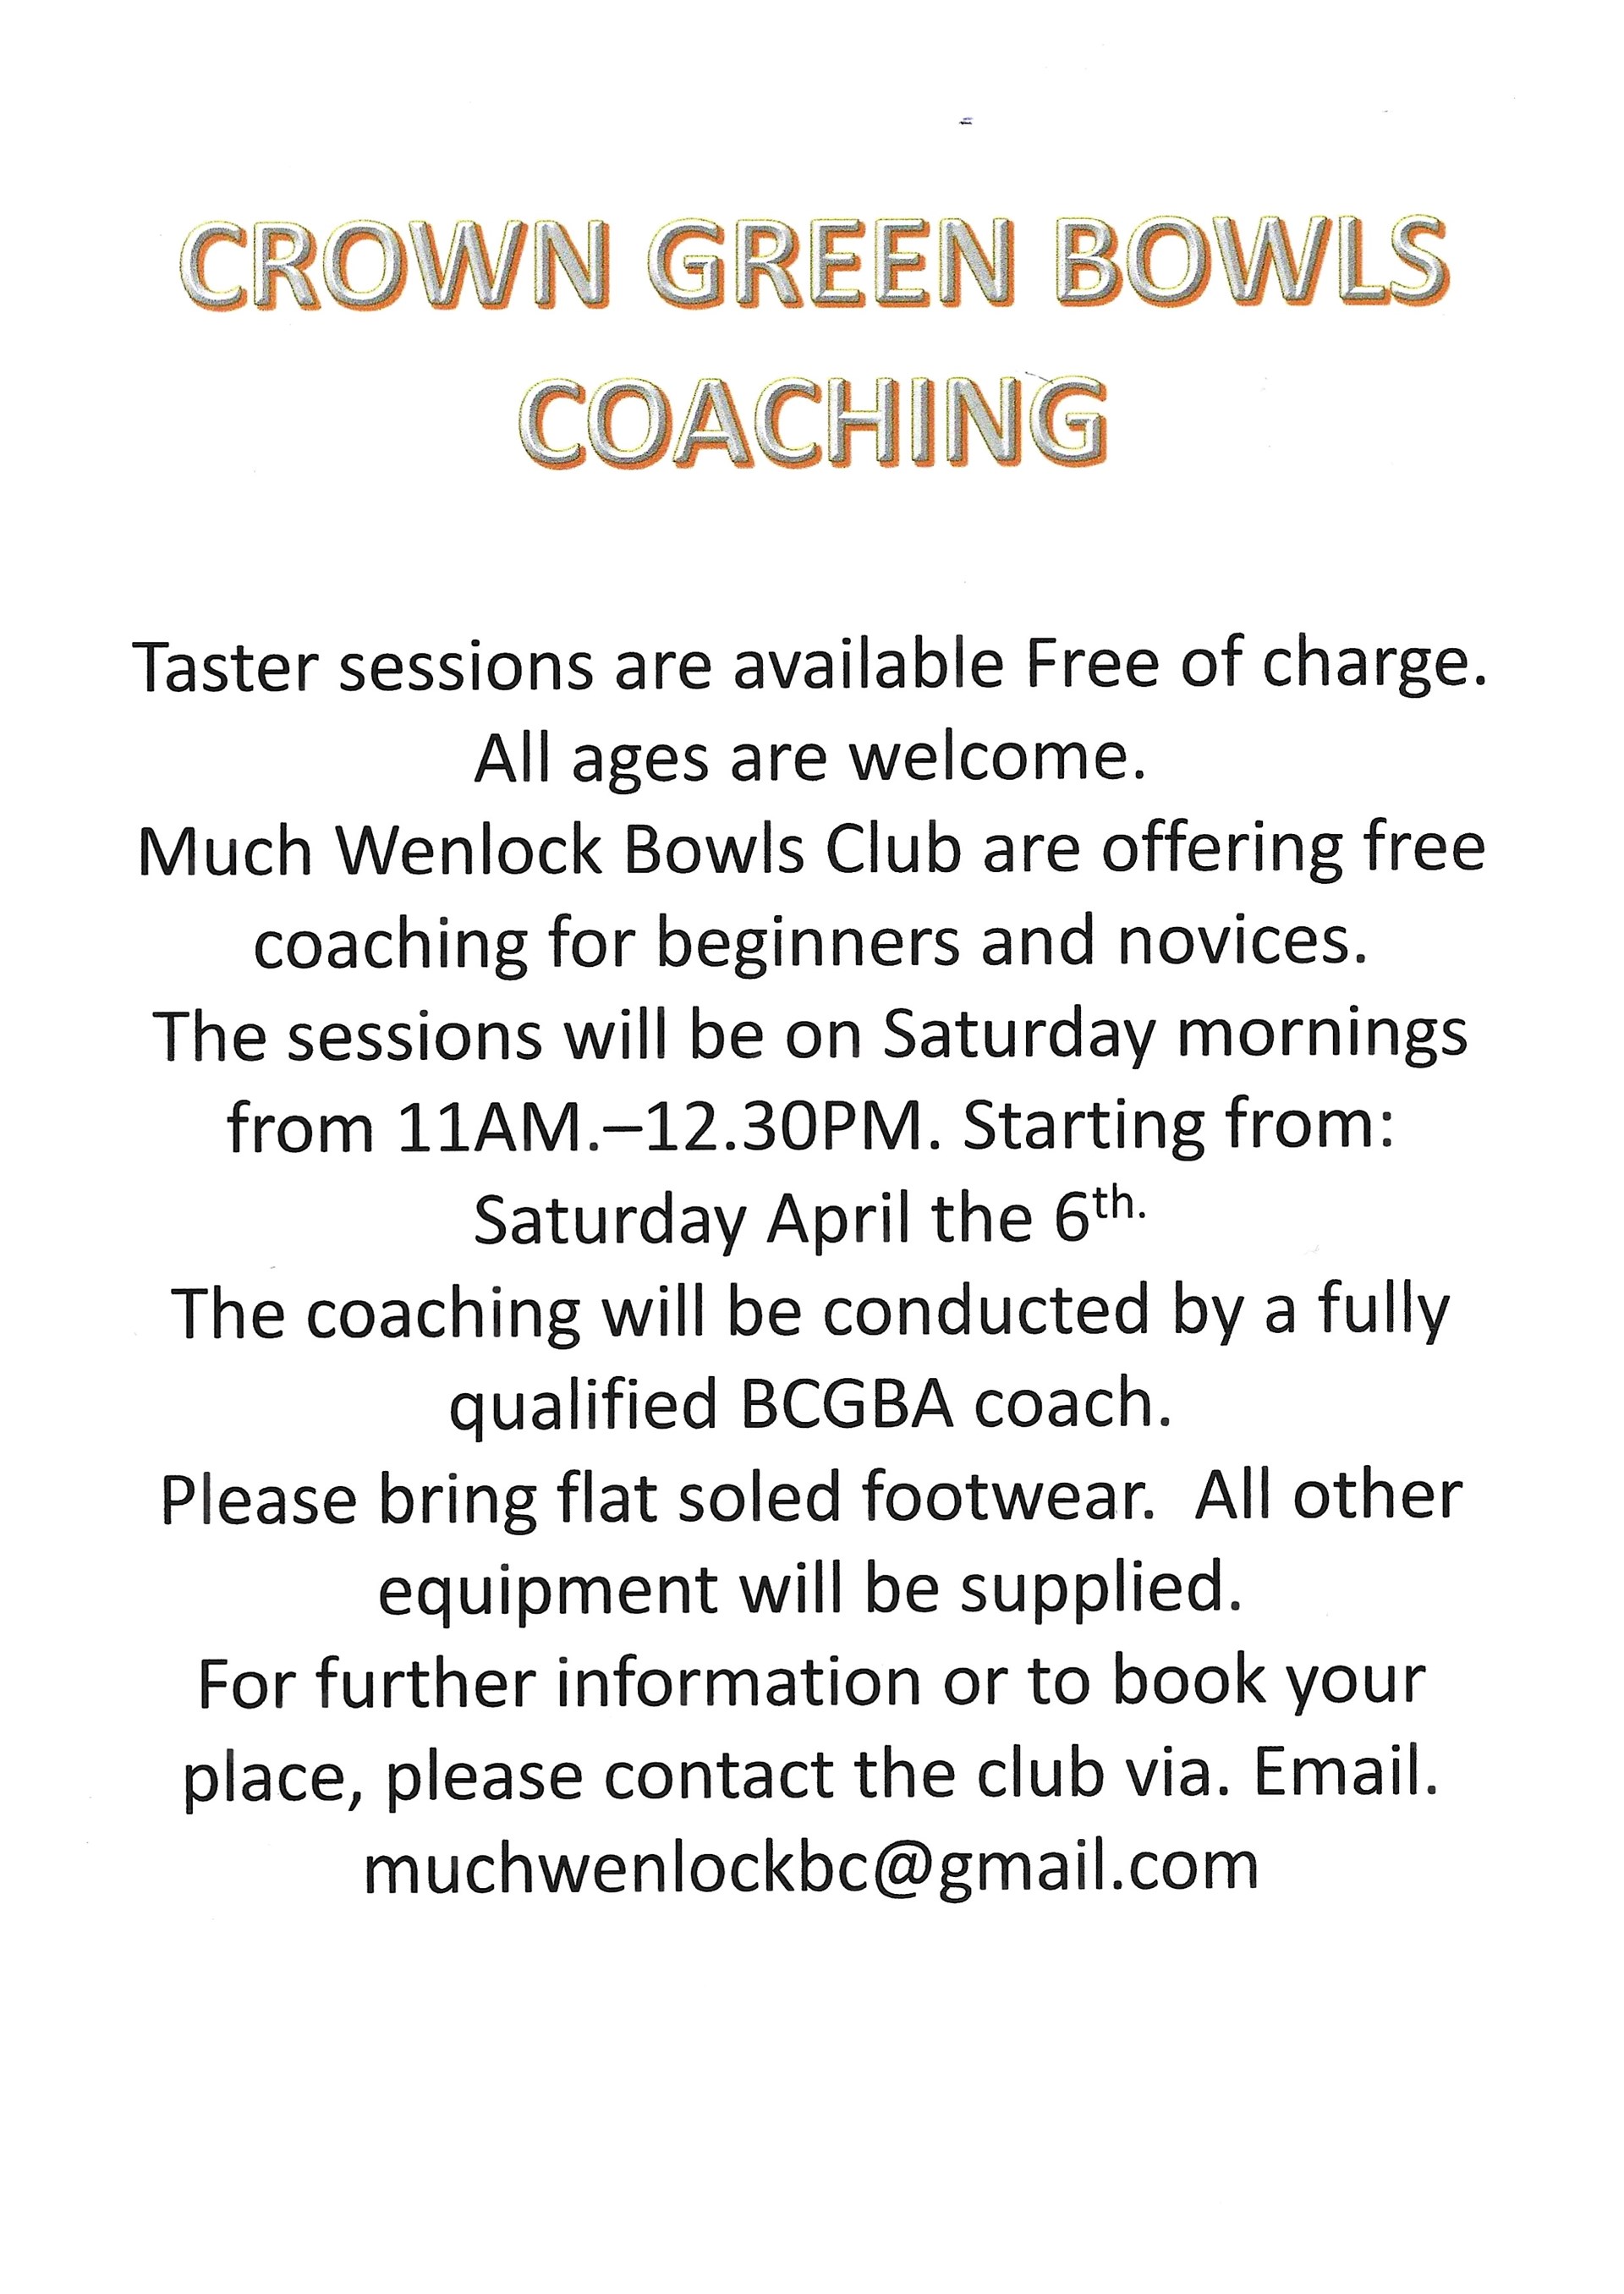 Much Wenlock Bowling Club Coaching